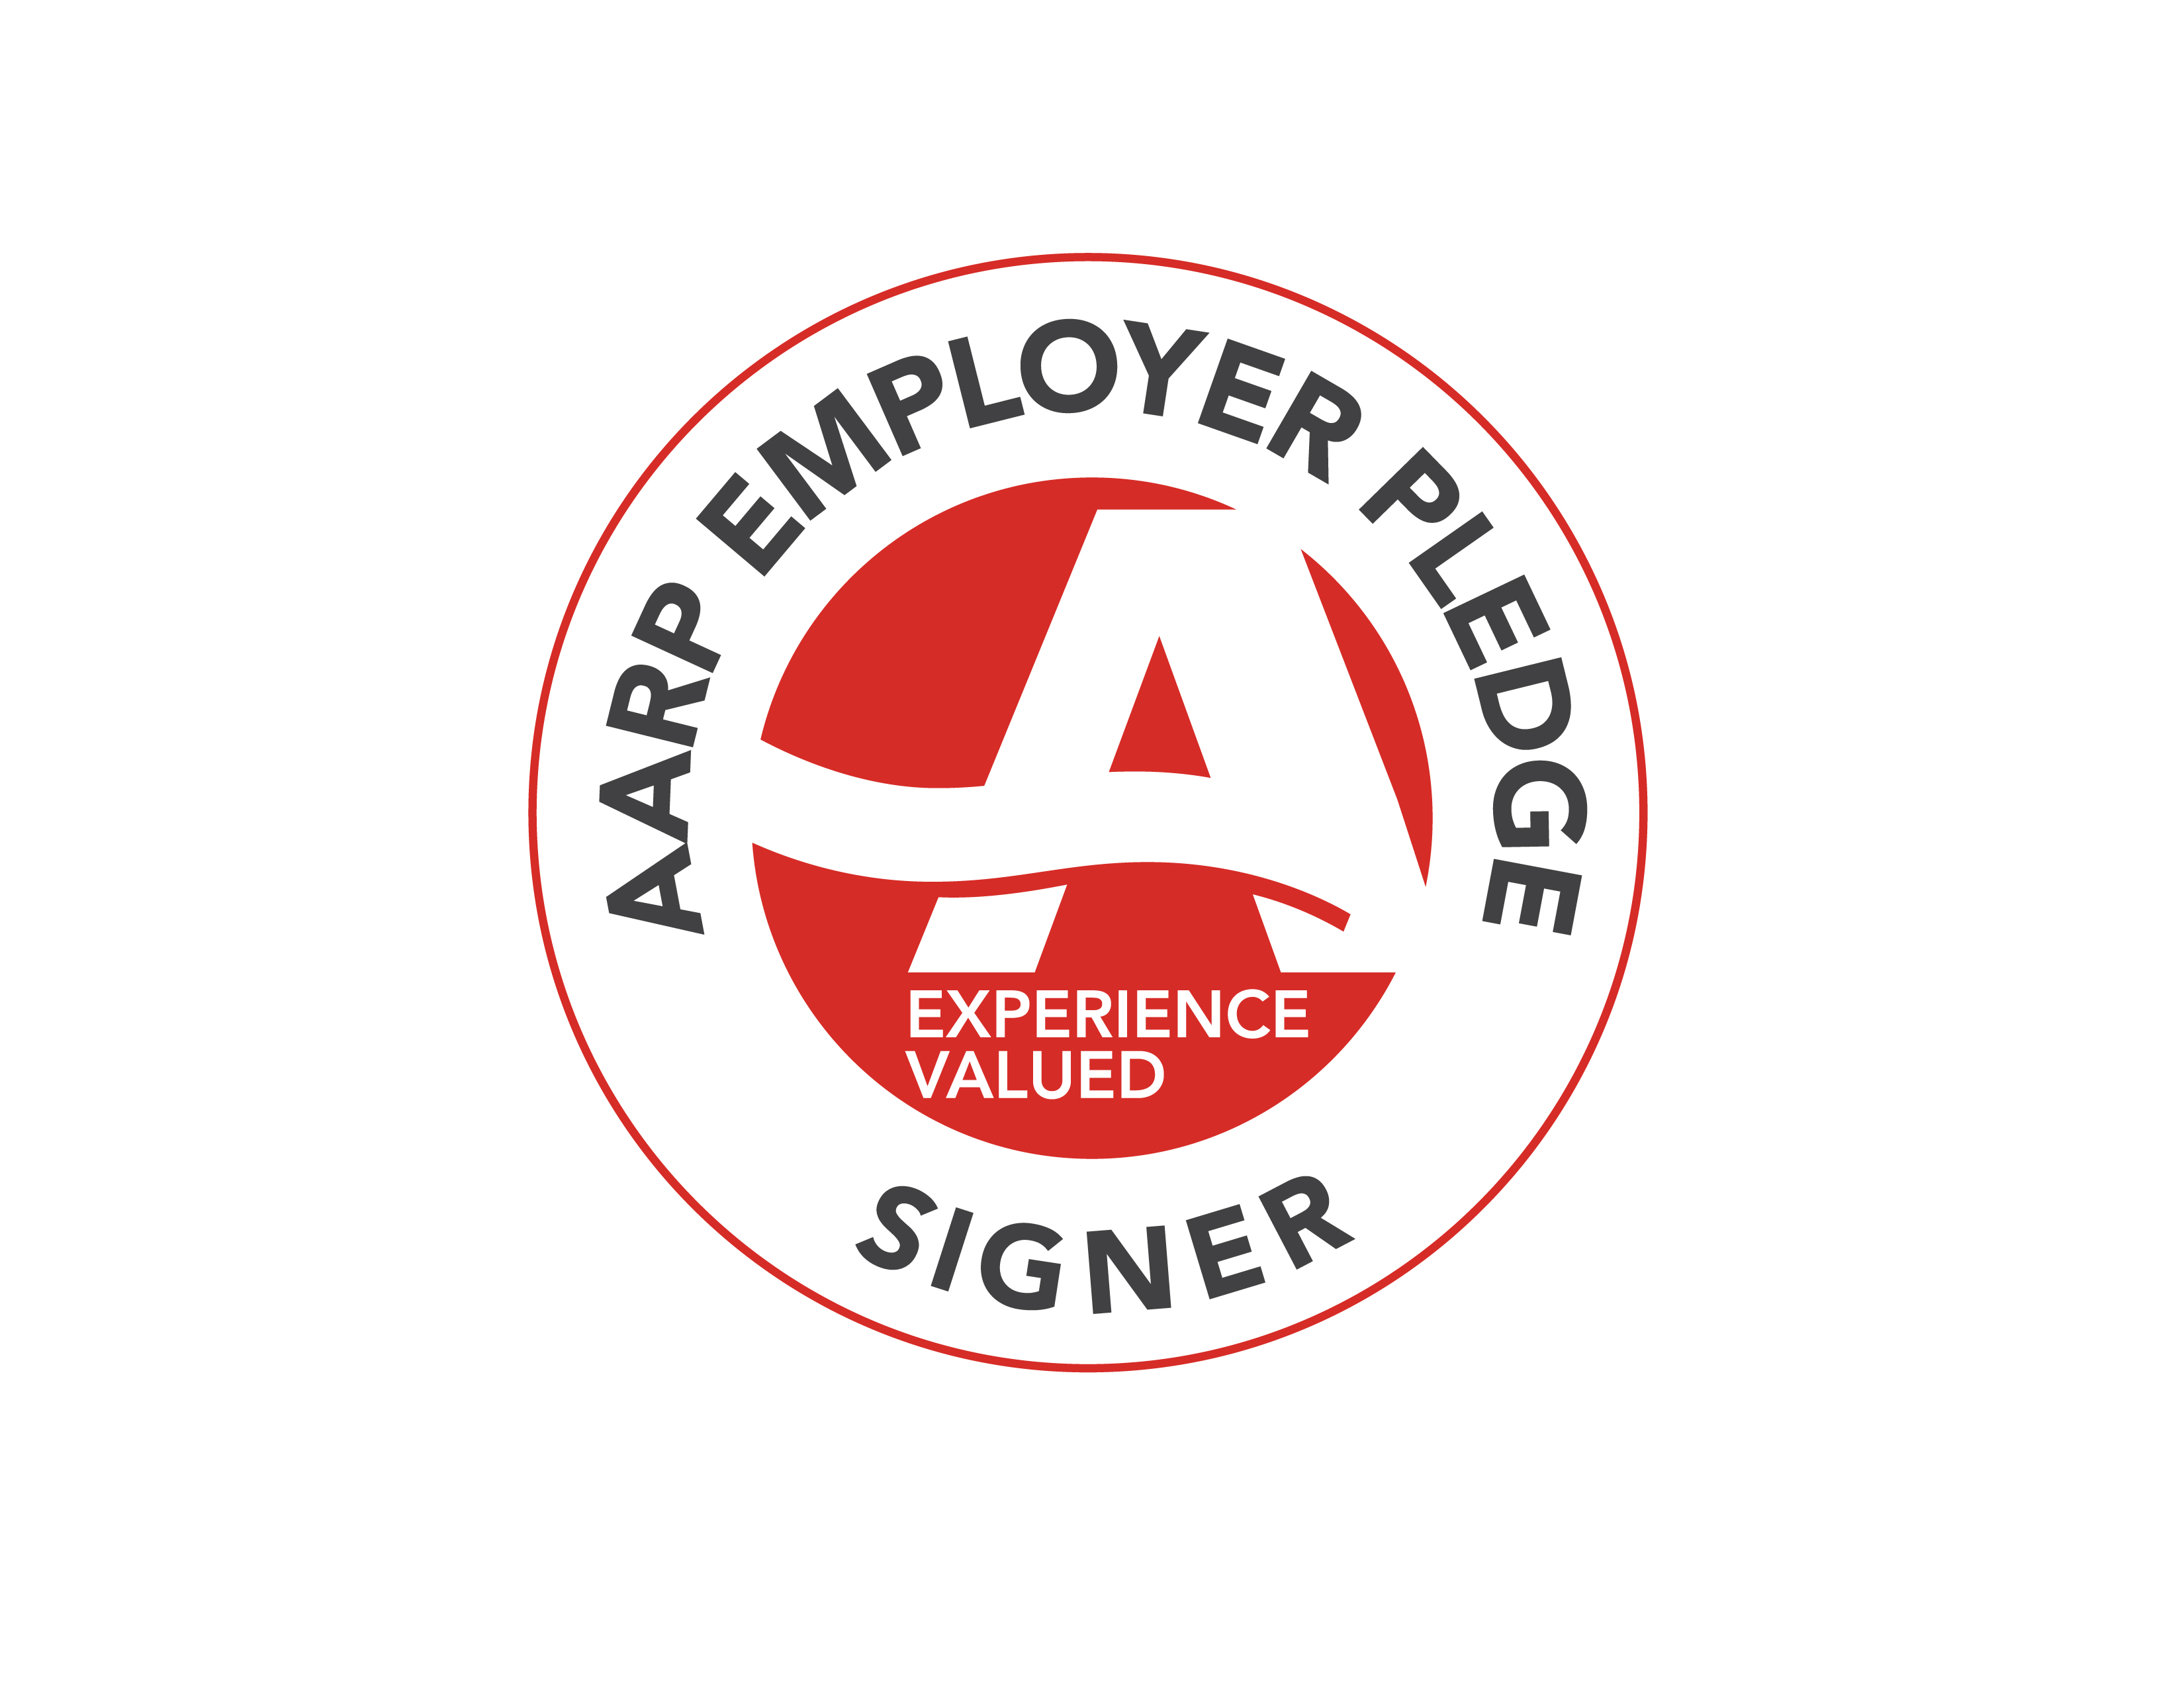 AEG is an AARP Employer Pledge Signer